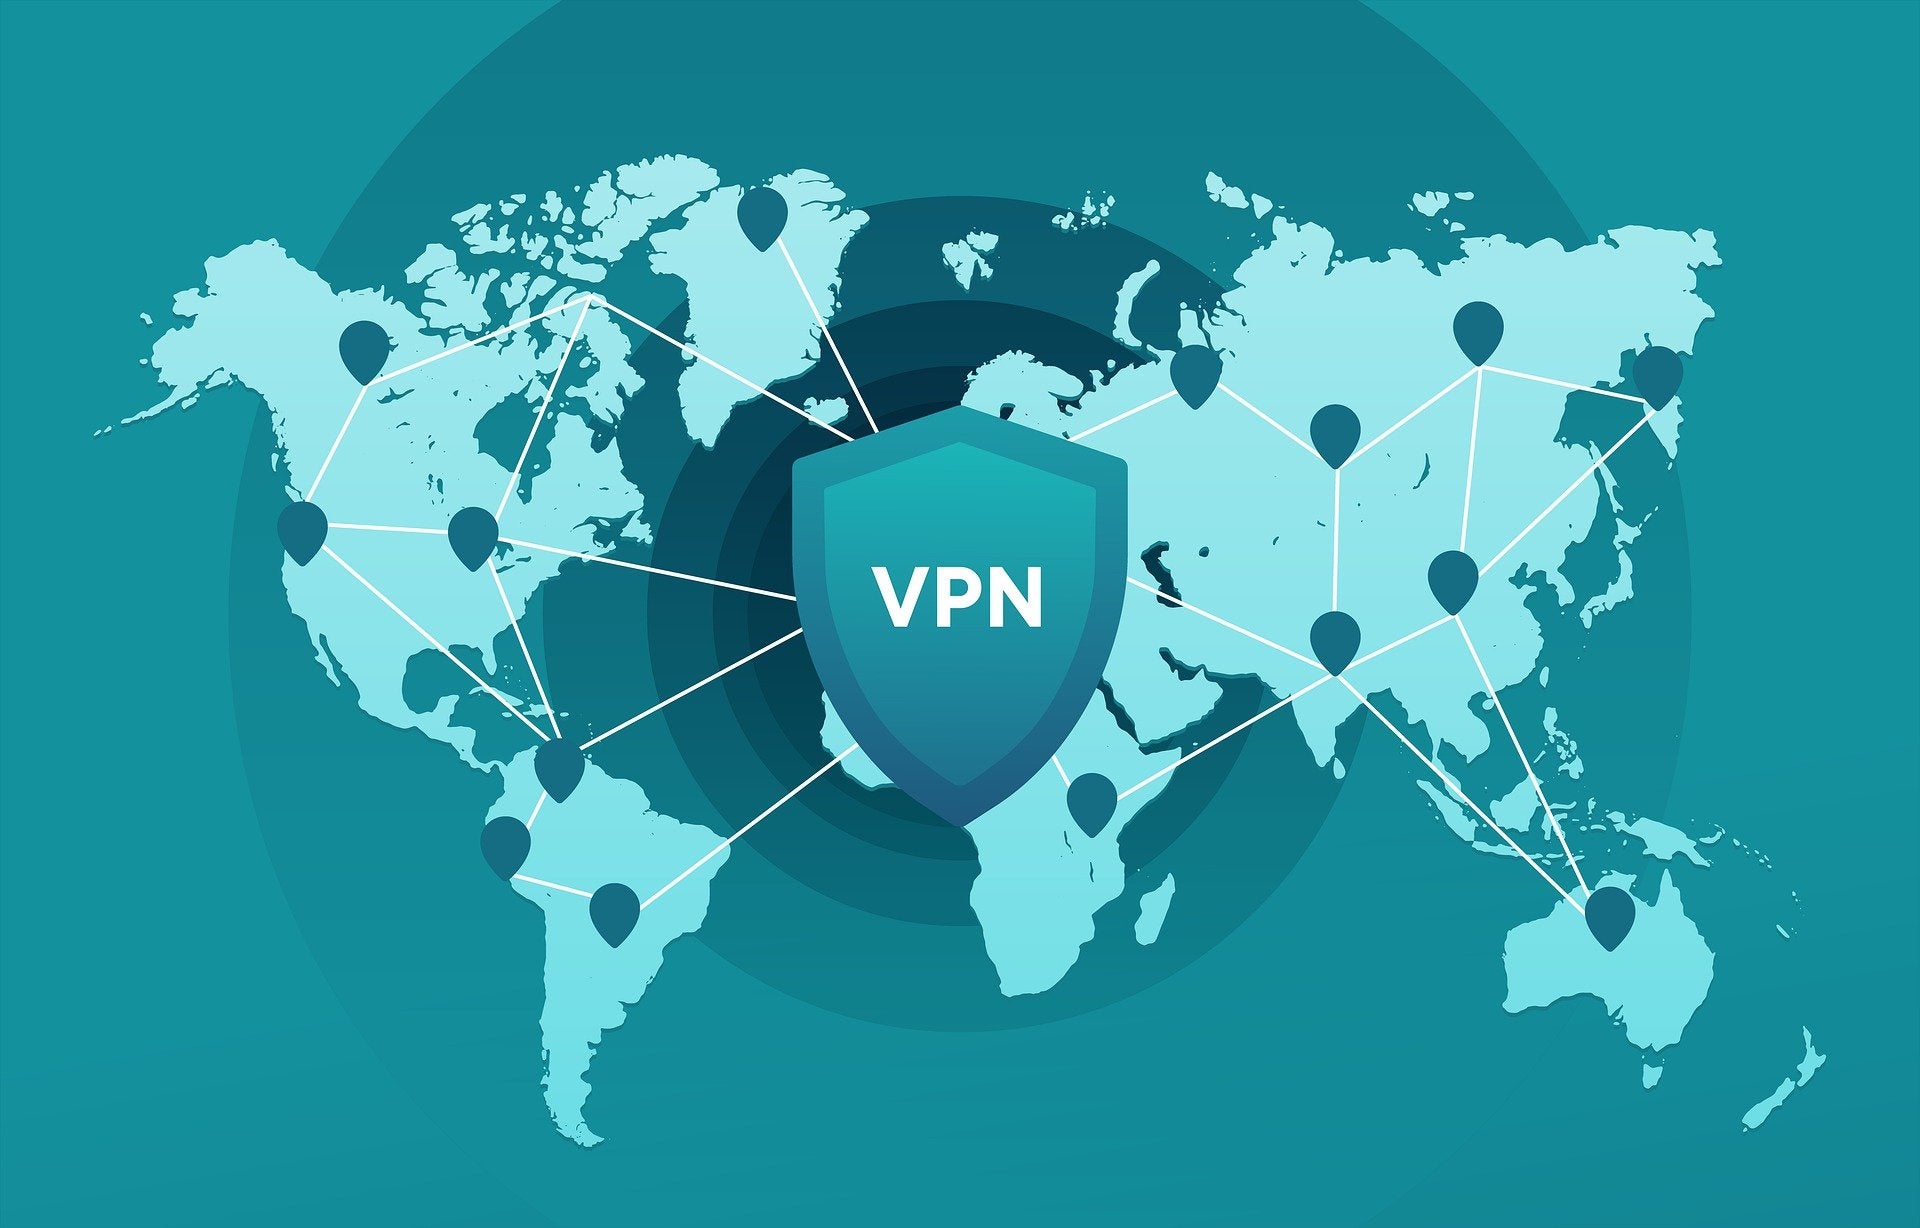 vpn connection types for internet